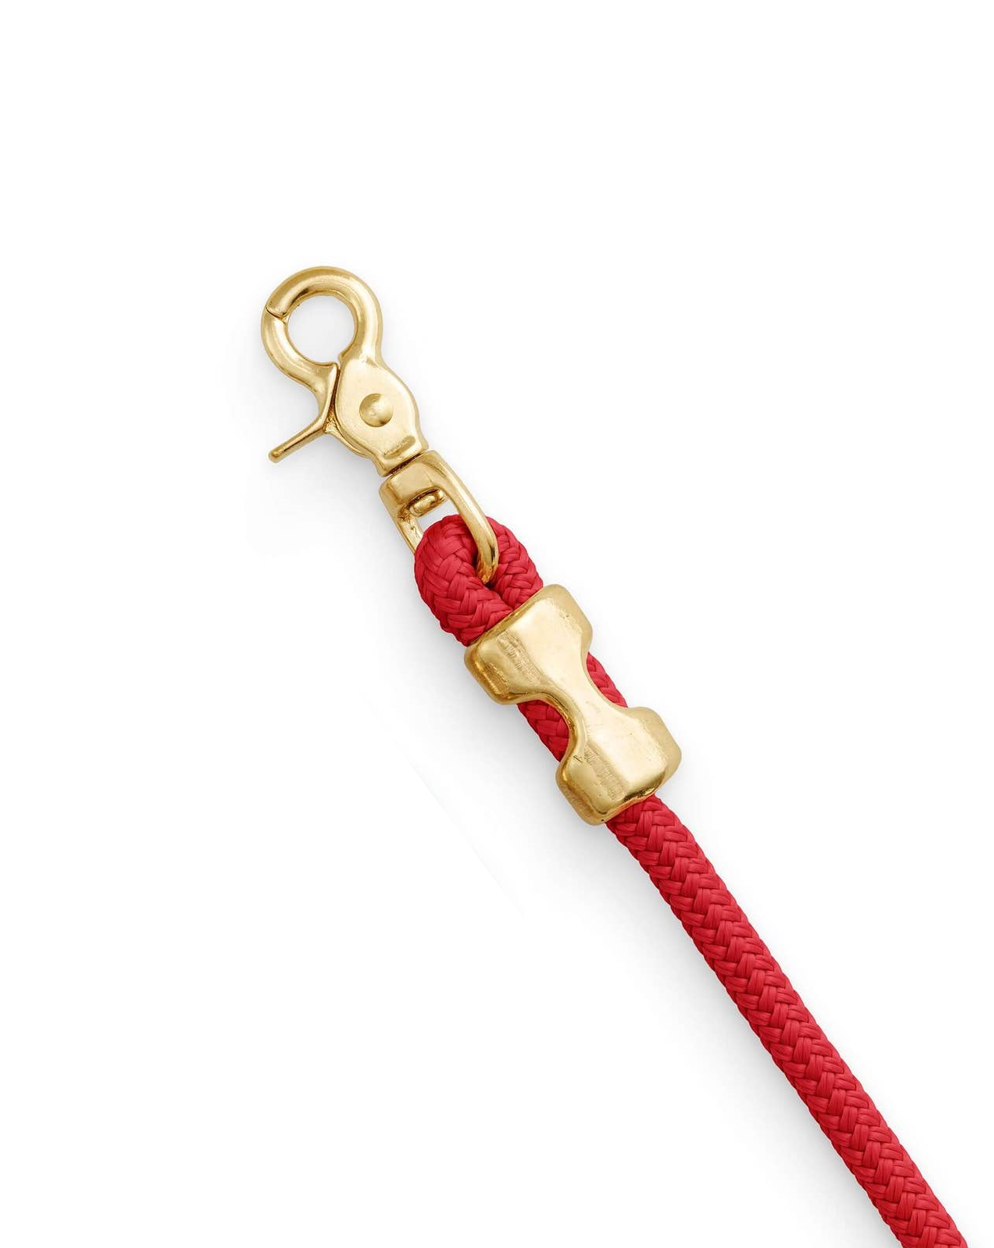 The Foggy Dog Ruby Marine Rope Dog Leash